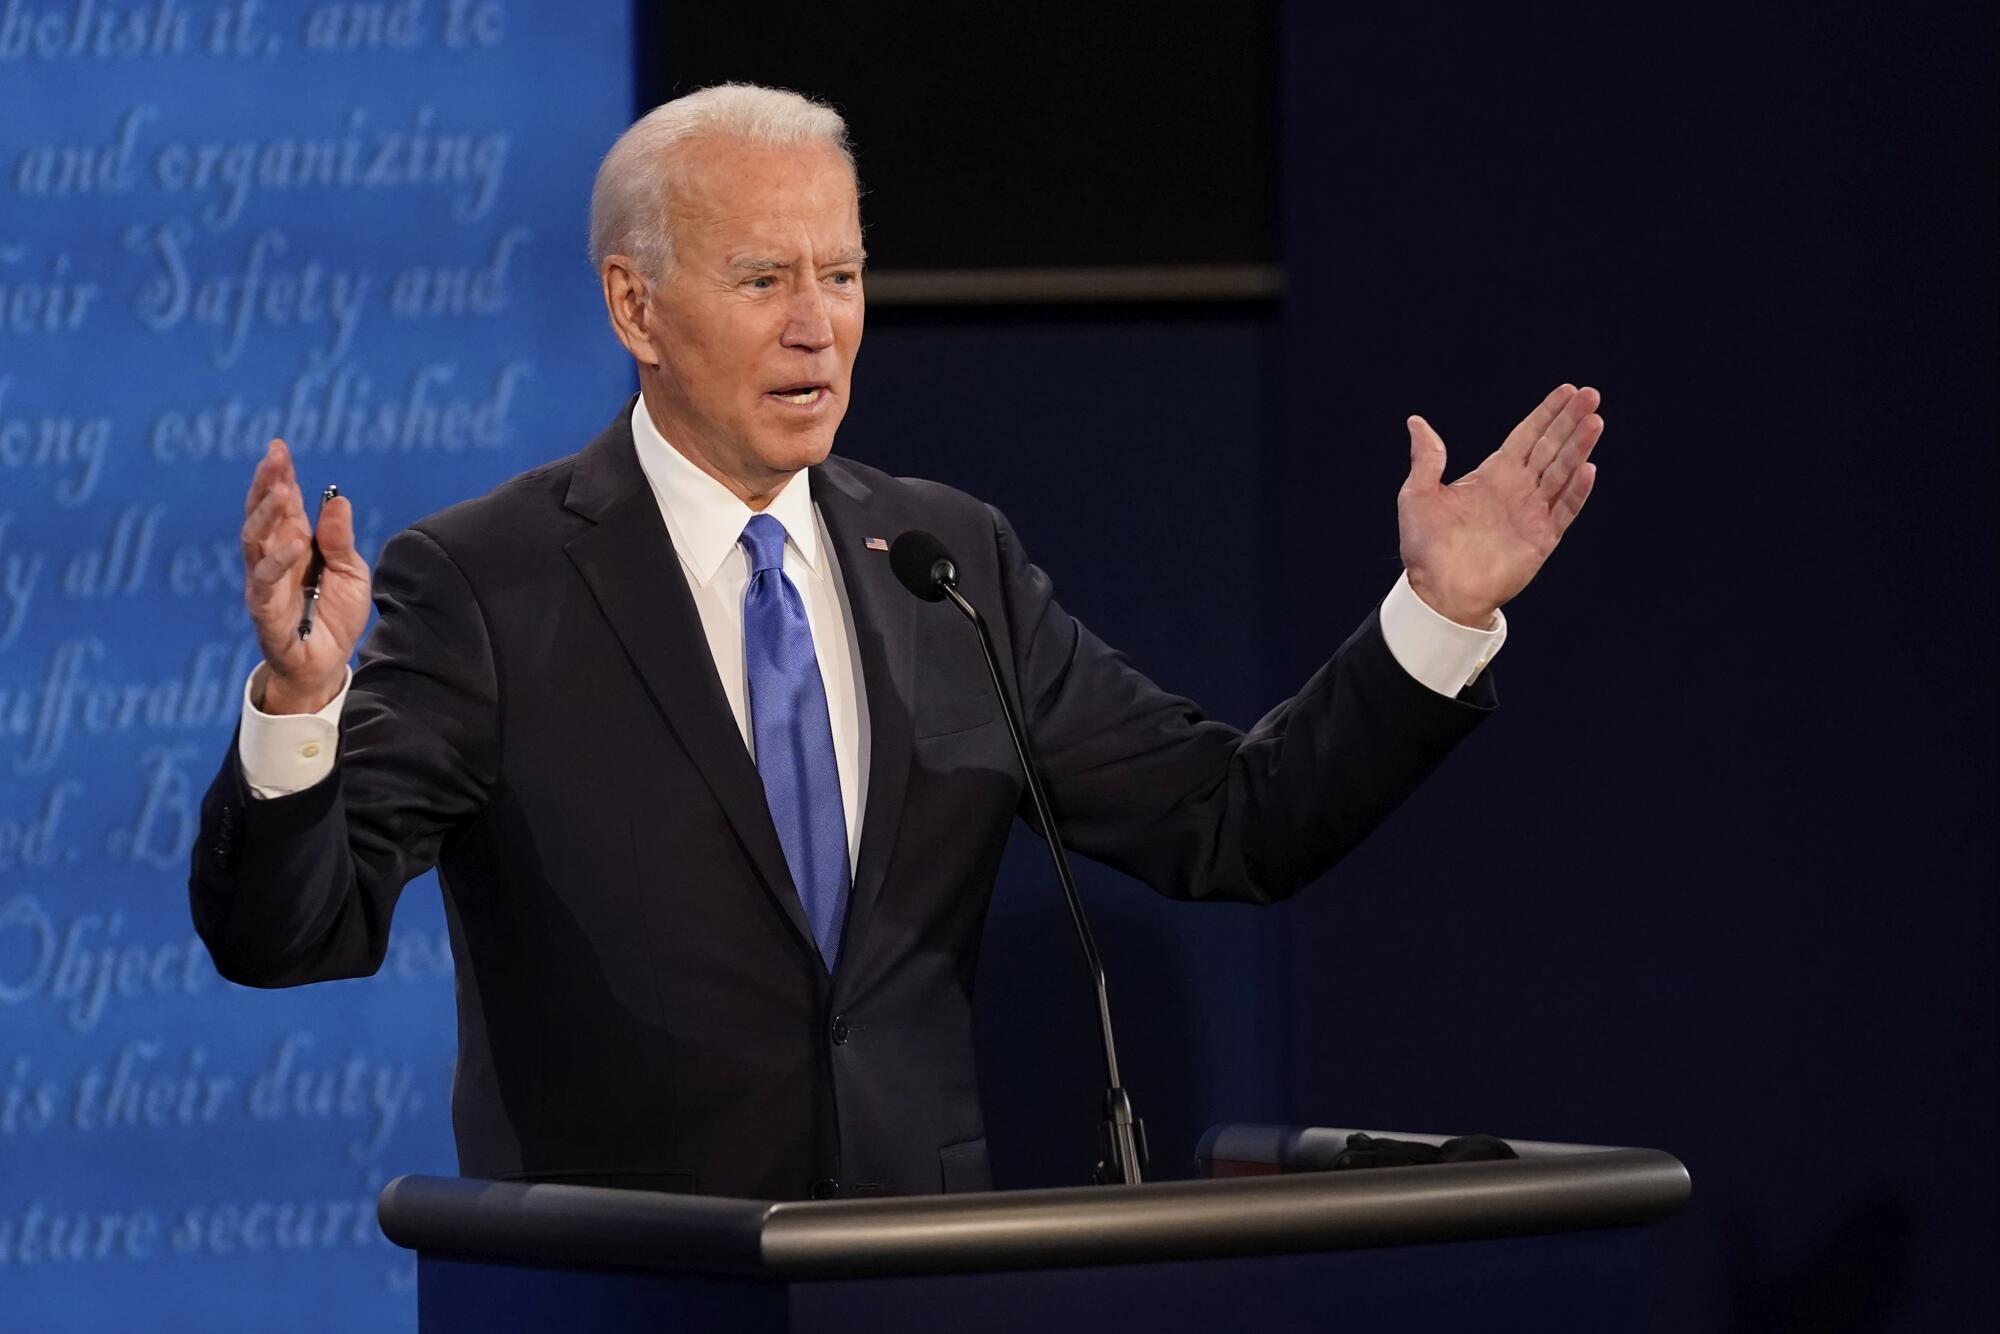 Joe Biden gestures with both hands as he speaks on stage